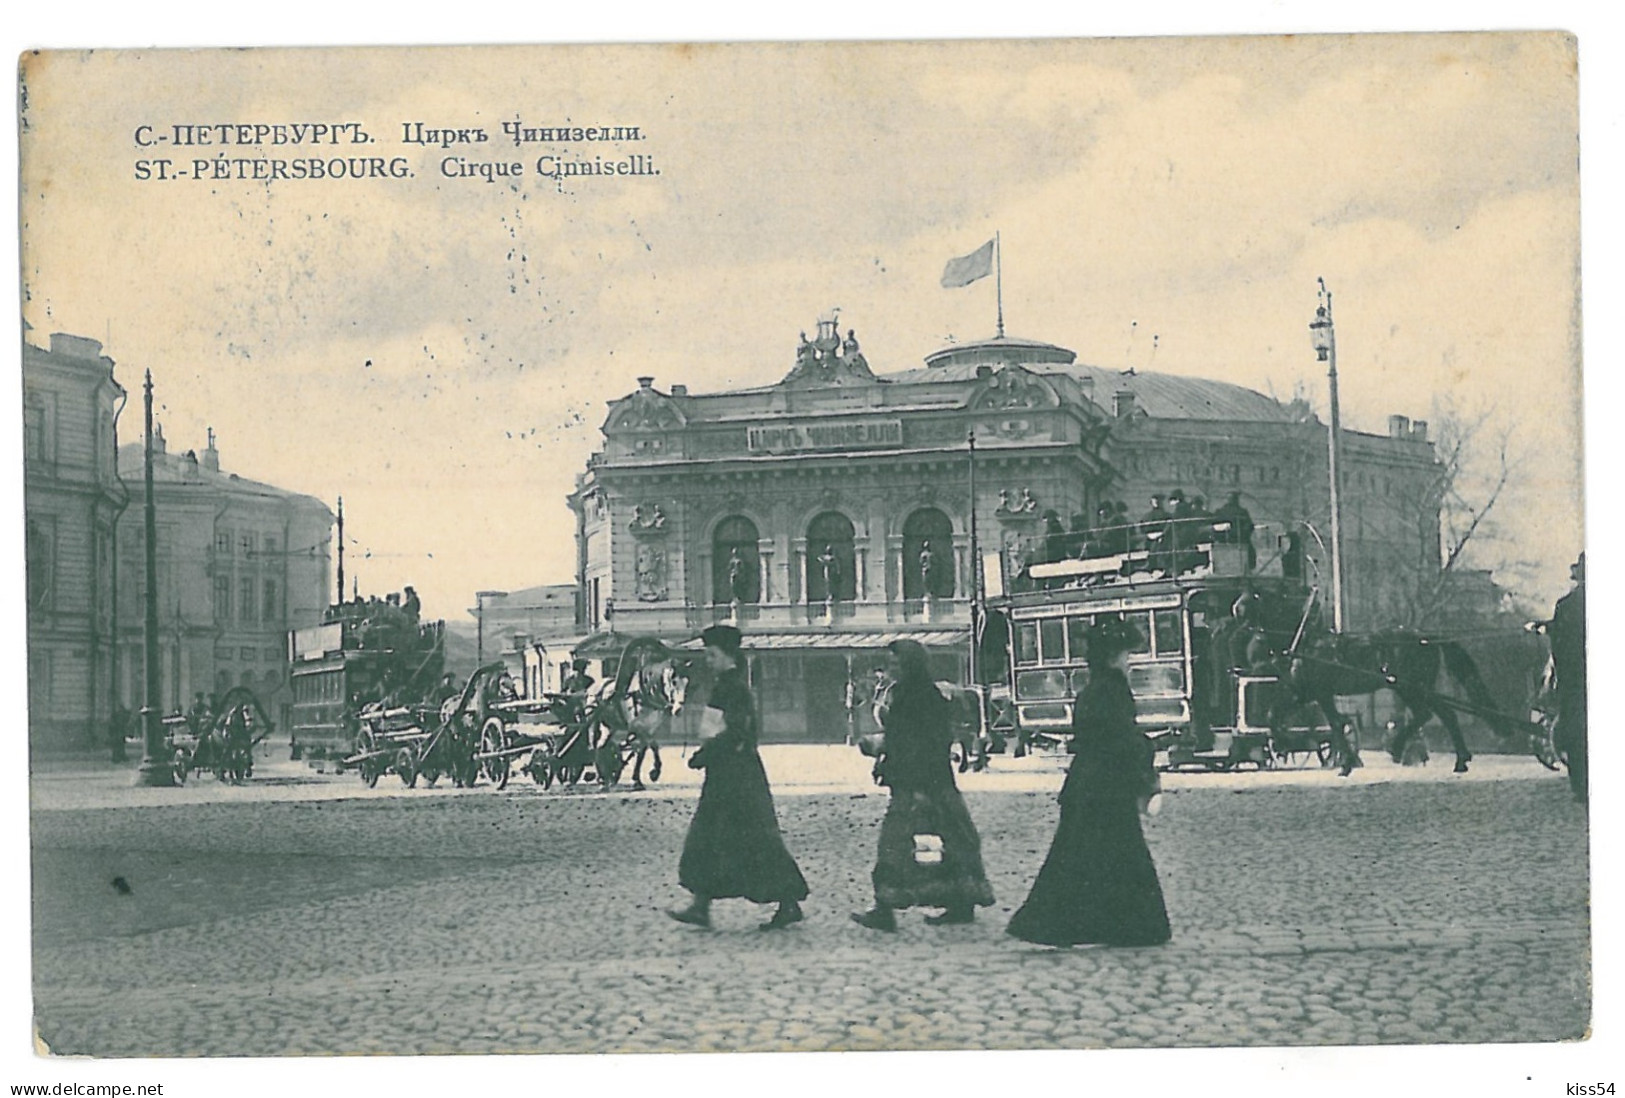 RUS 93 - 15245 ST. PETERSBURG, Cinniselli CIRCUS, Russia - Old Postcard - Used - 1909 - Russia